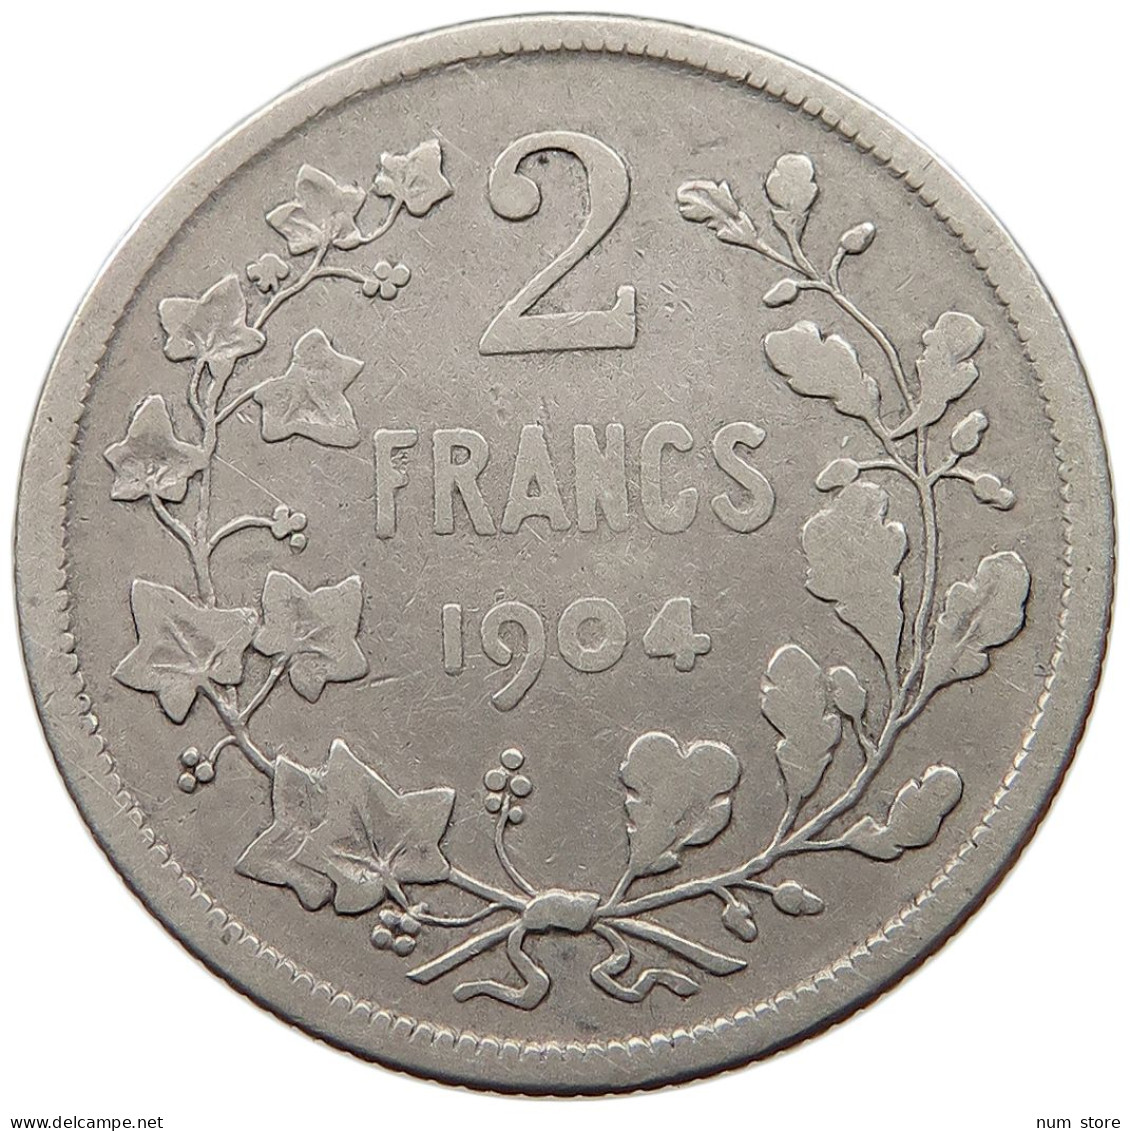 BELGIUM 2 FRANCS 1904 NO PERIOD IN SIGNATURE #t065 0311 - 2 Frank